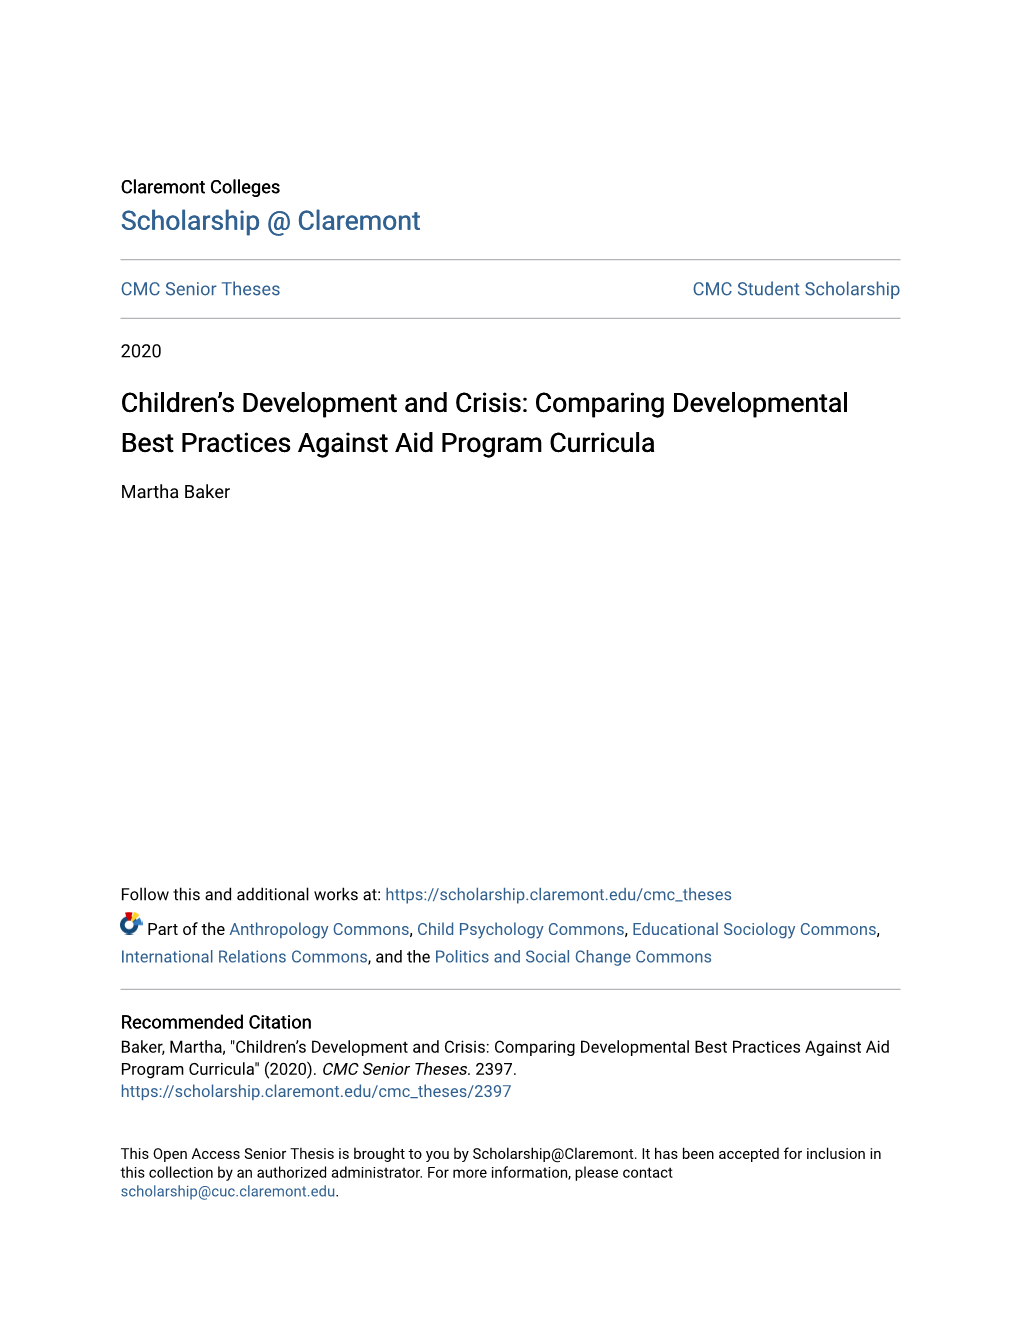 Children's Development and Crisis